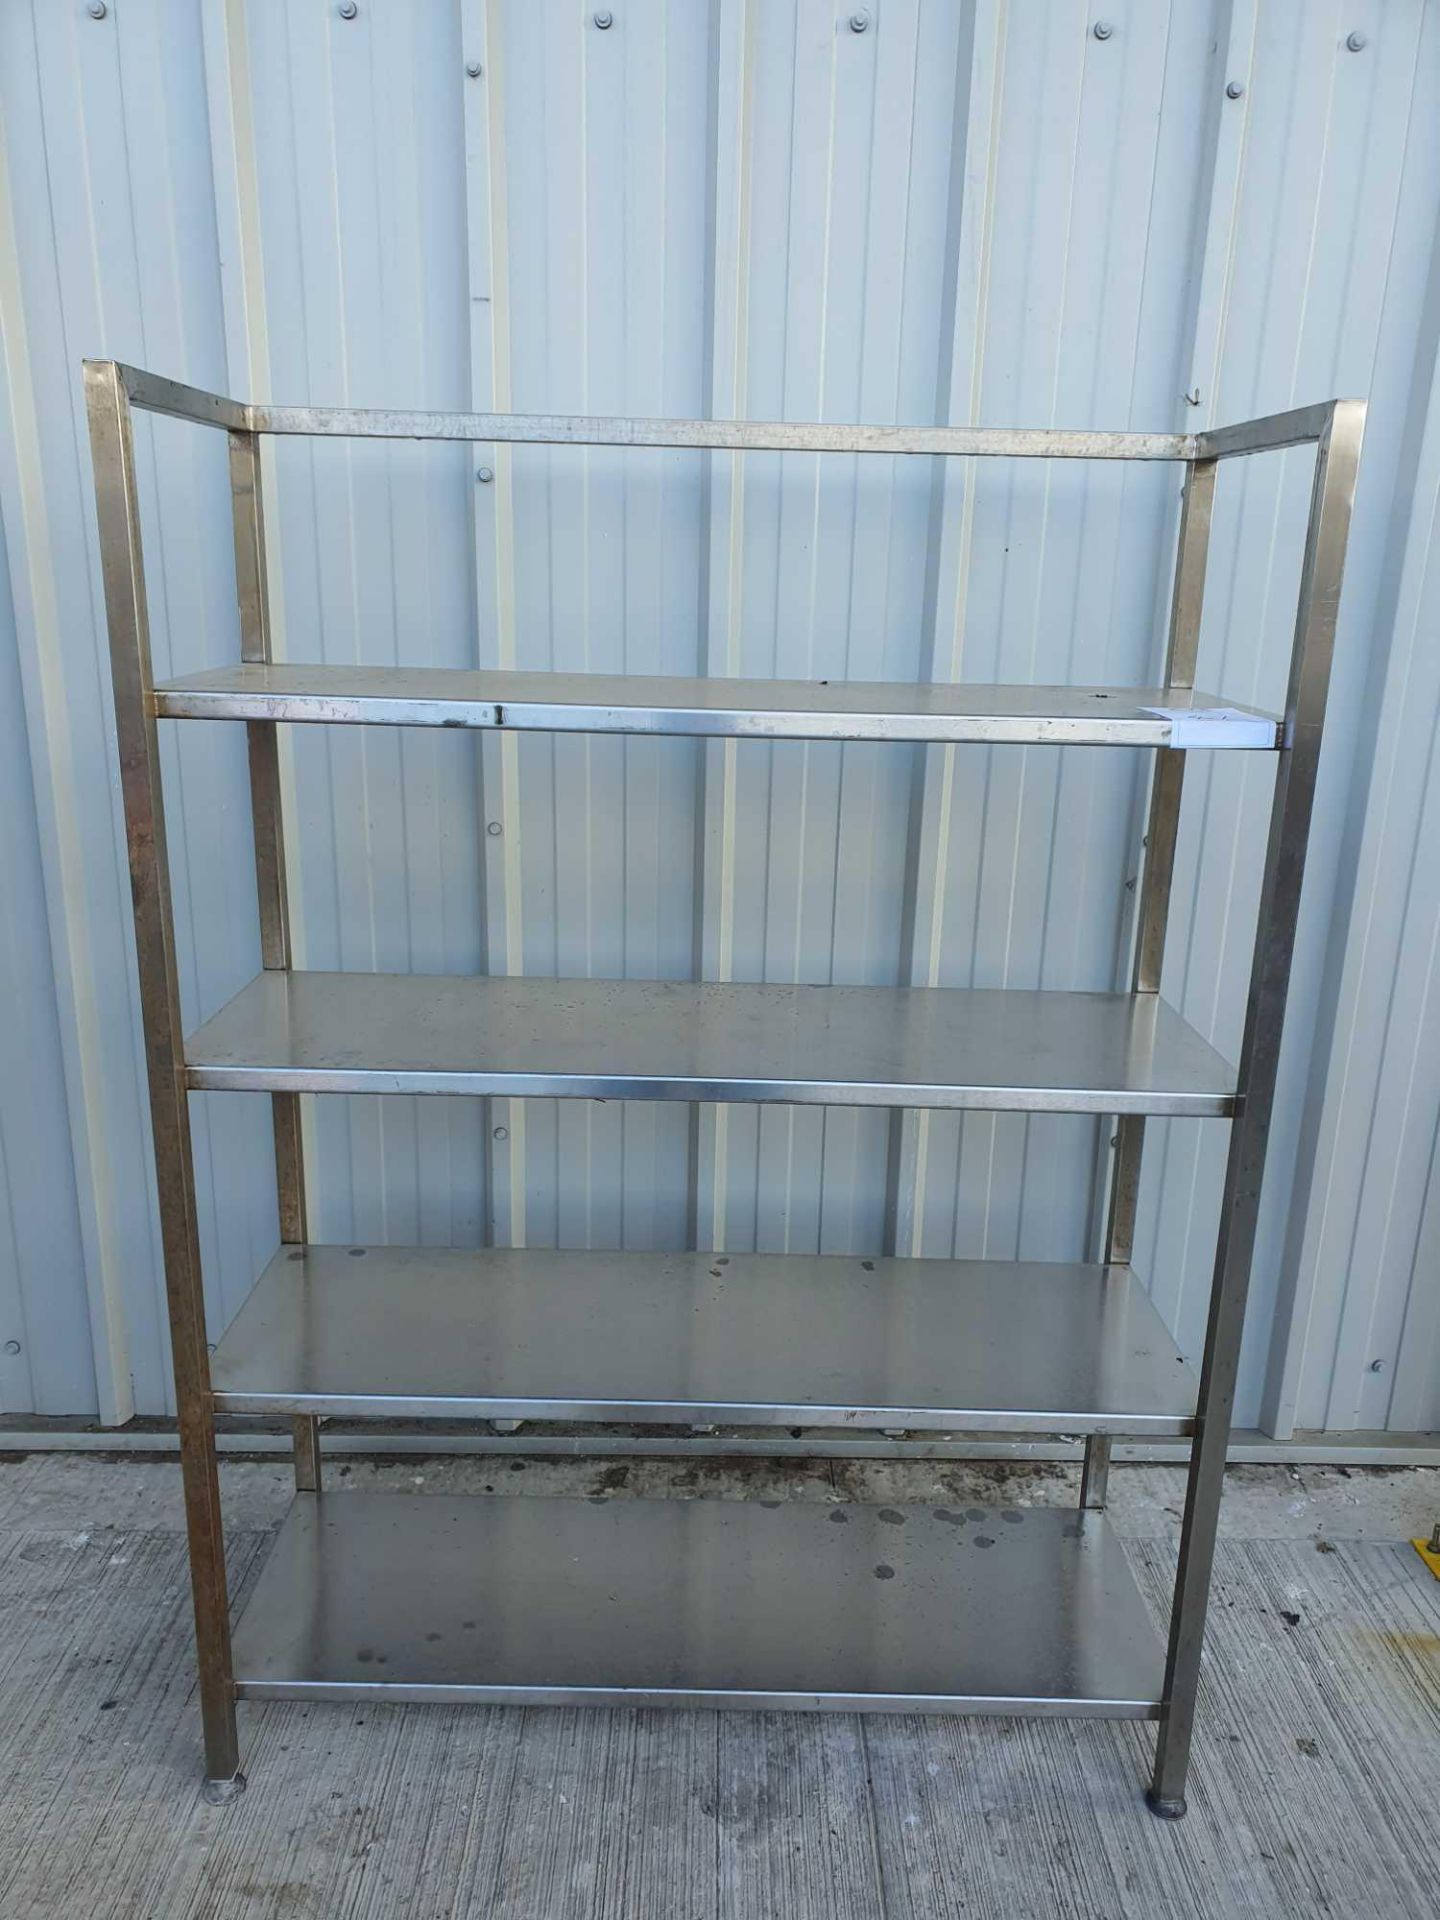 Stainless steel 4 tier shelves